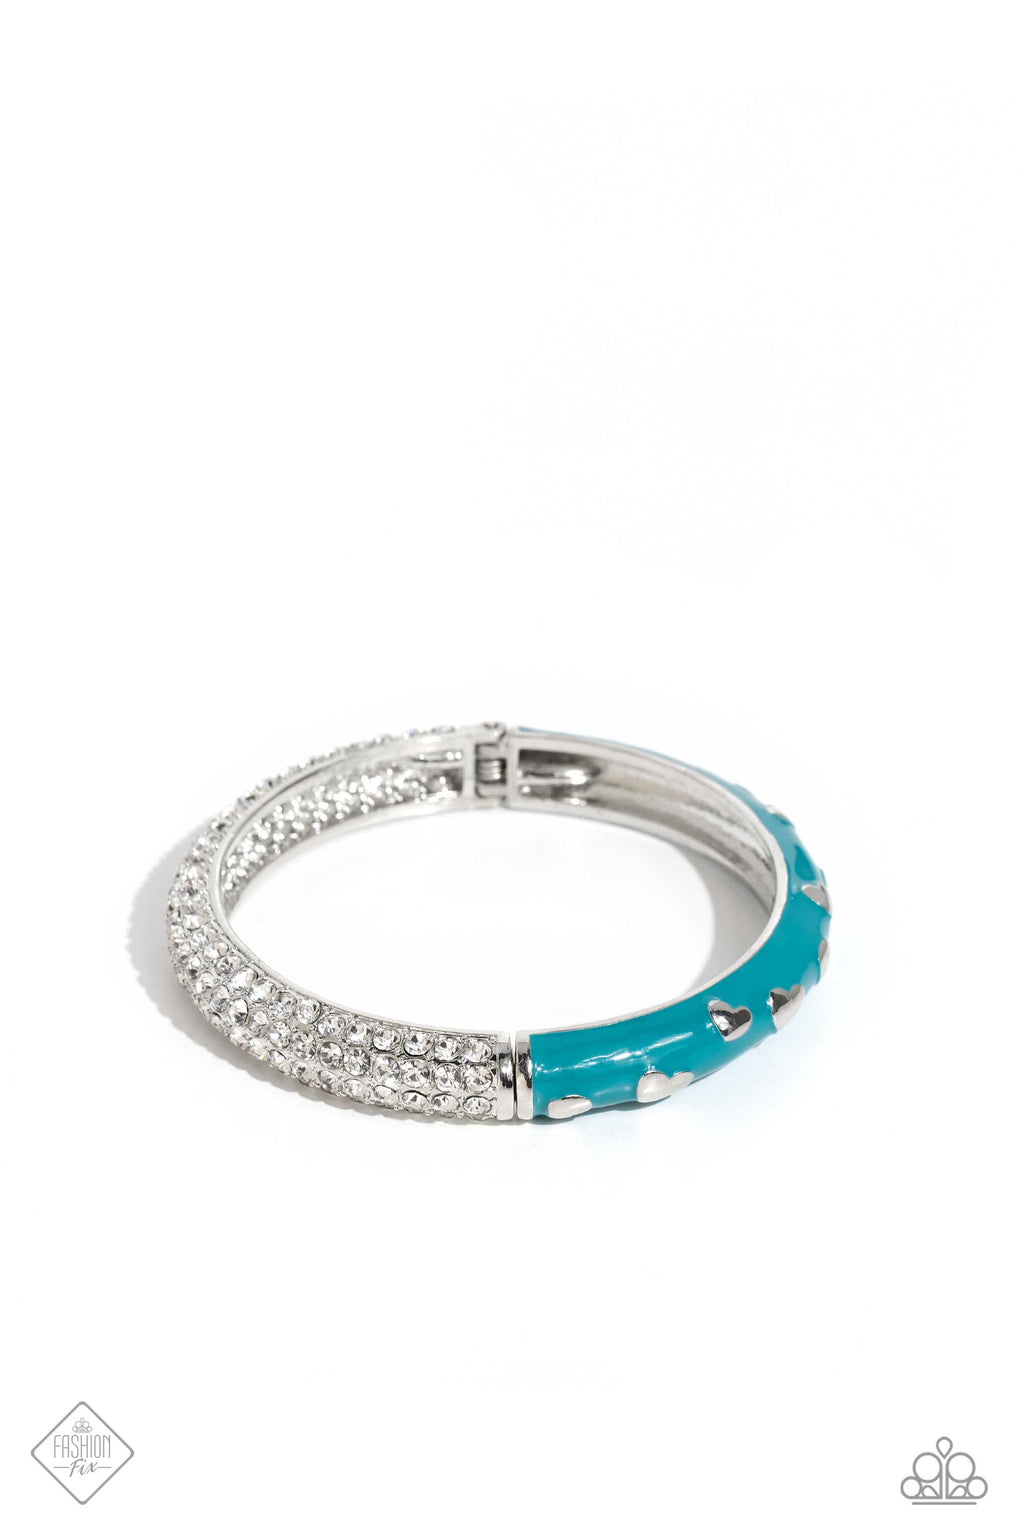 five-dollar-jewelry-color-caliber-blue-bracelet-paparazzi-accessories